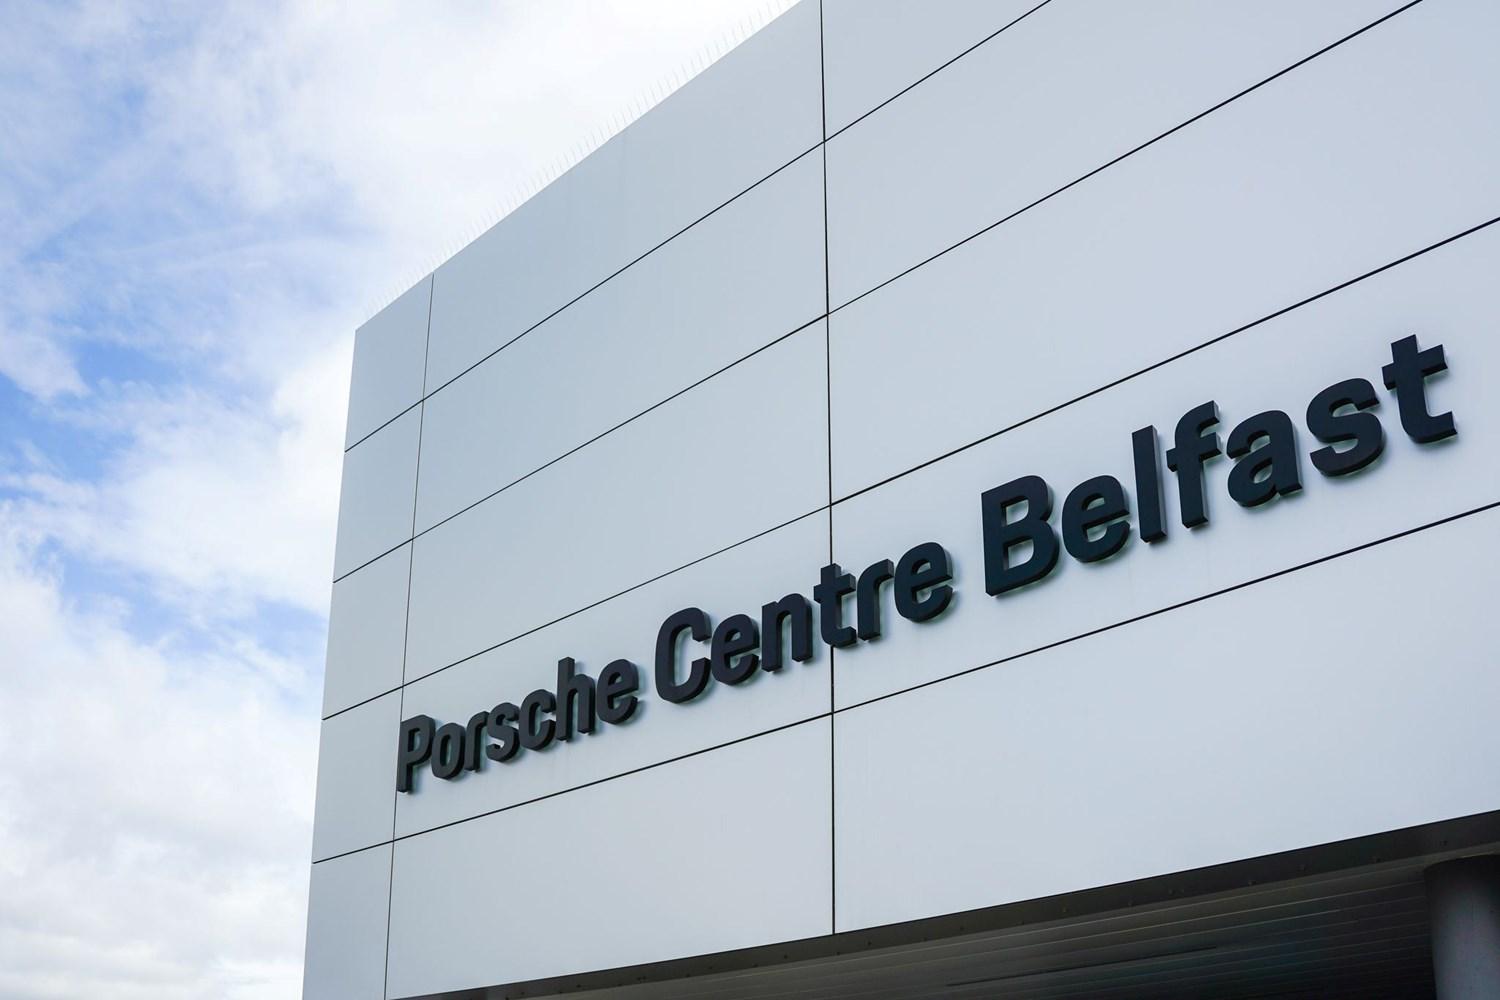 Exterior of the Porsche Centre Belfast showroom with 'Porsche Centre Belfast' sign on silver tiles.